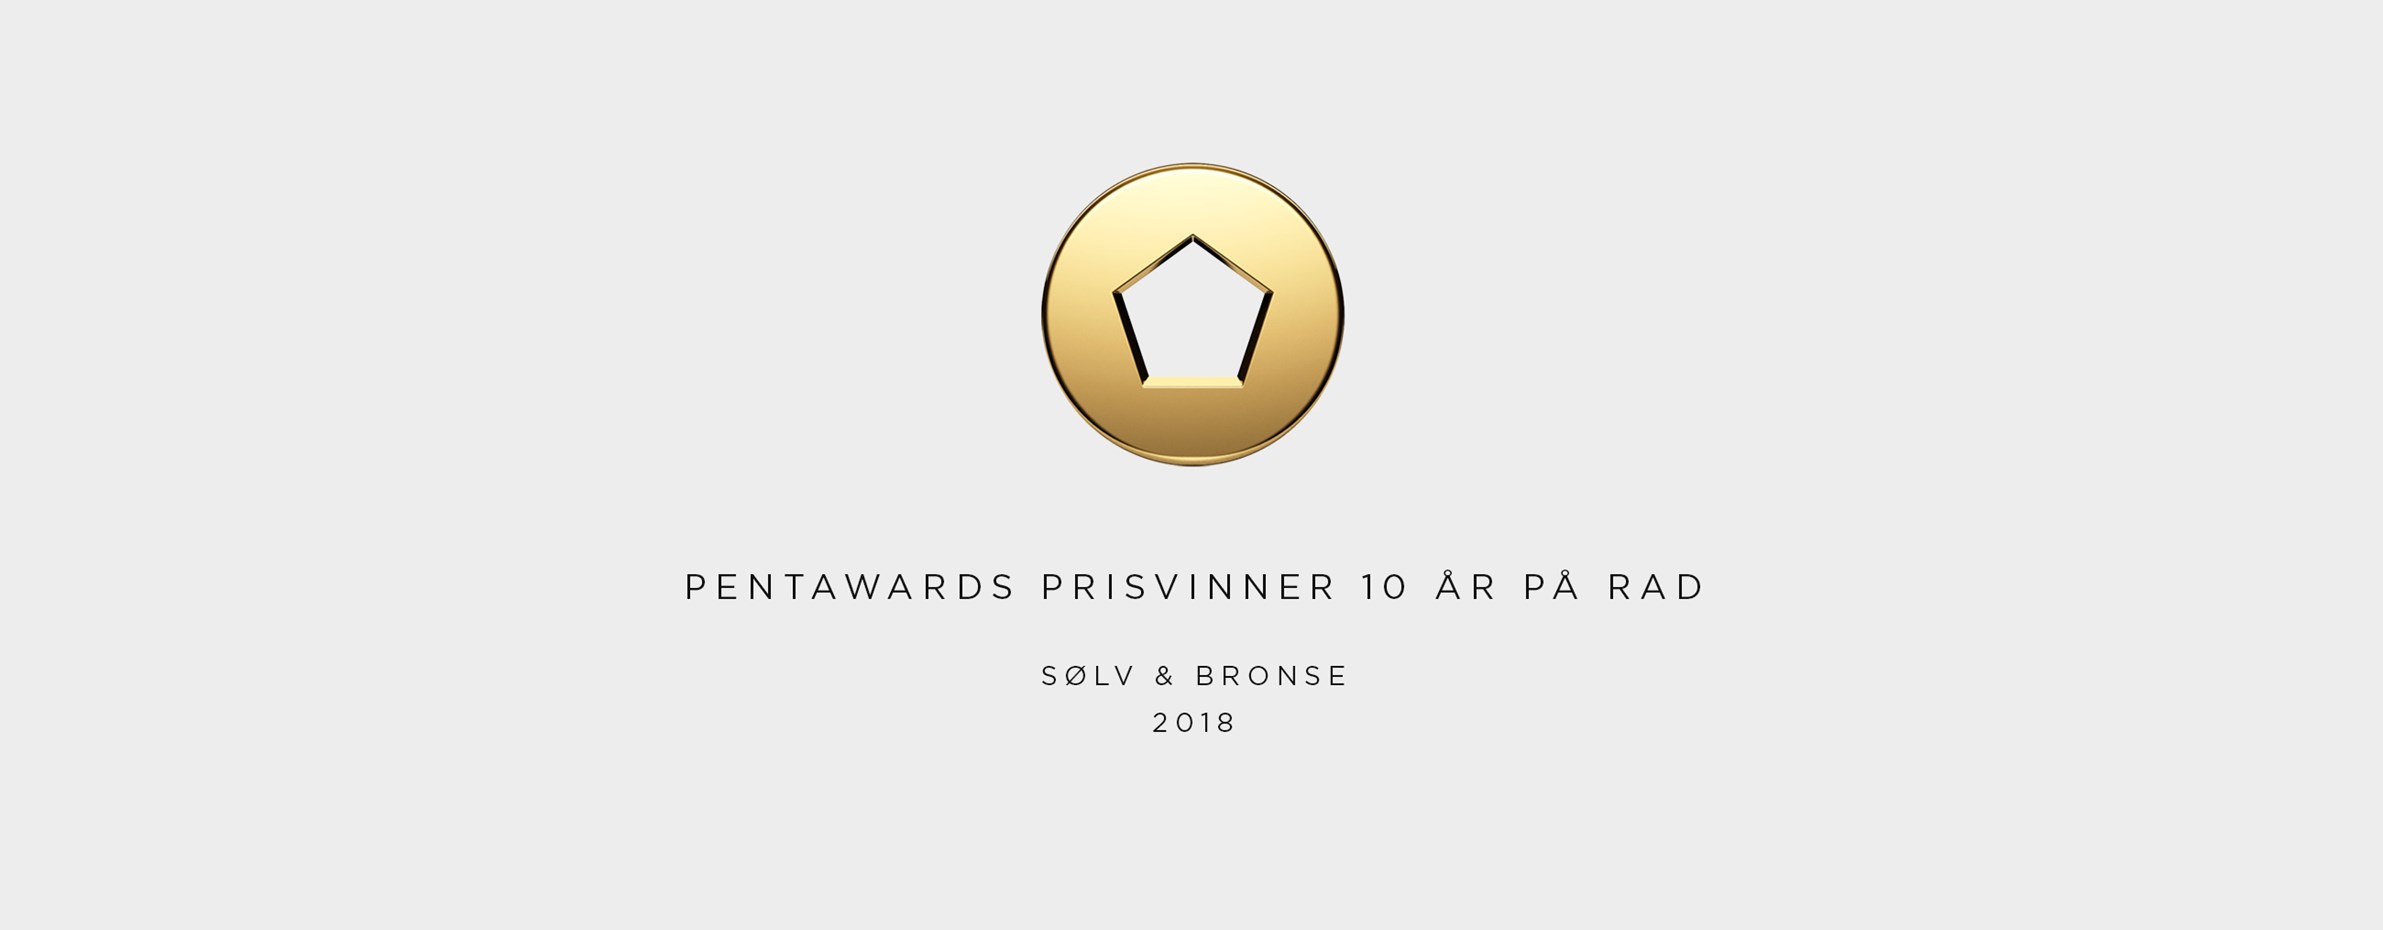 Premiejubileum i årets Pentawards